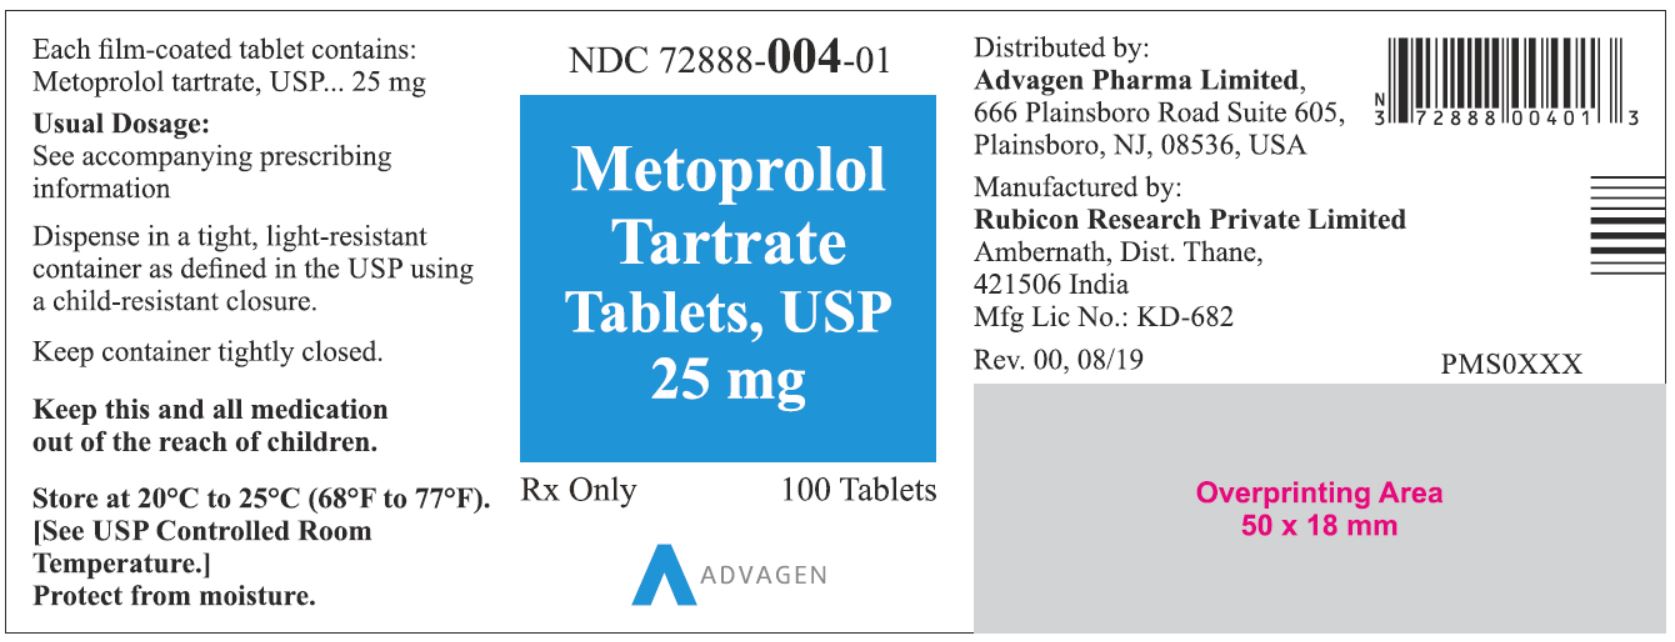 NDC: <a href=/NDC/72888-004-01>72888-004-01</a> - Metoprolol Tartrate Tablets, USP 25 mg - 100 Tablets